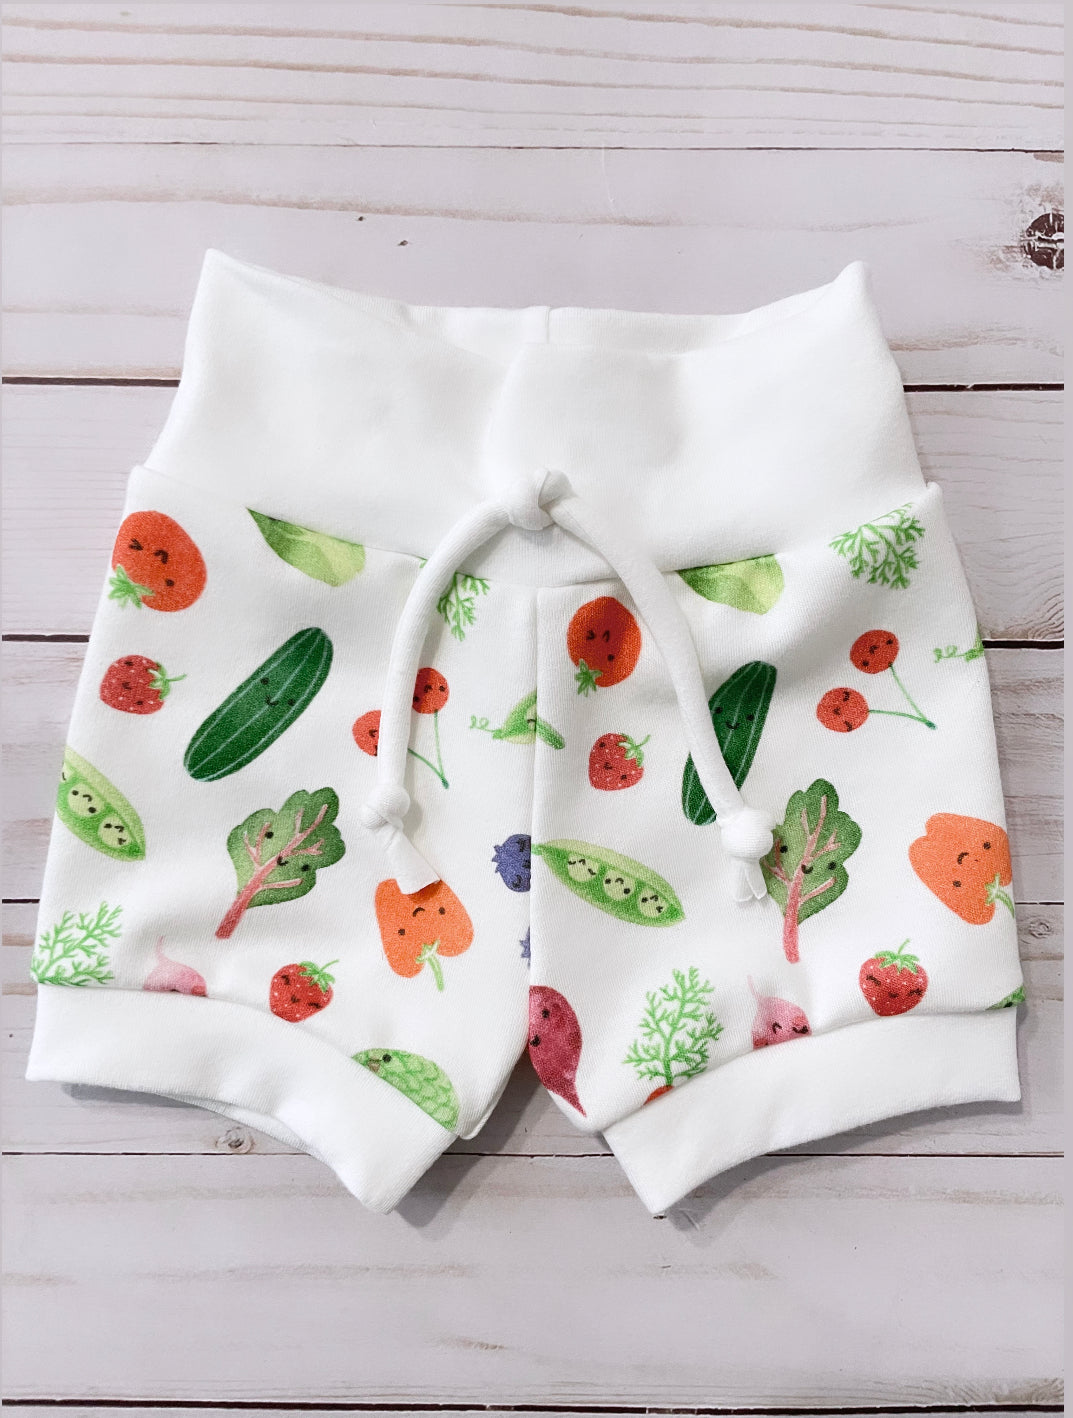 Garden vegetable shorts